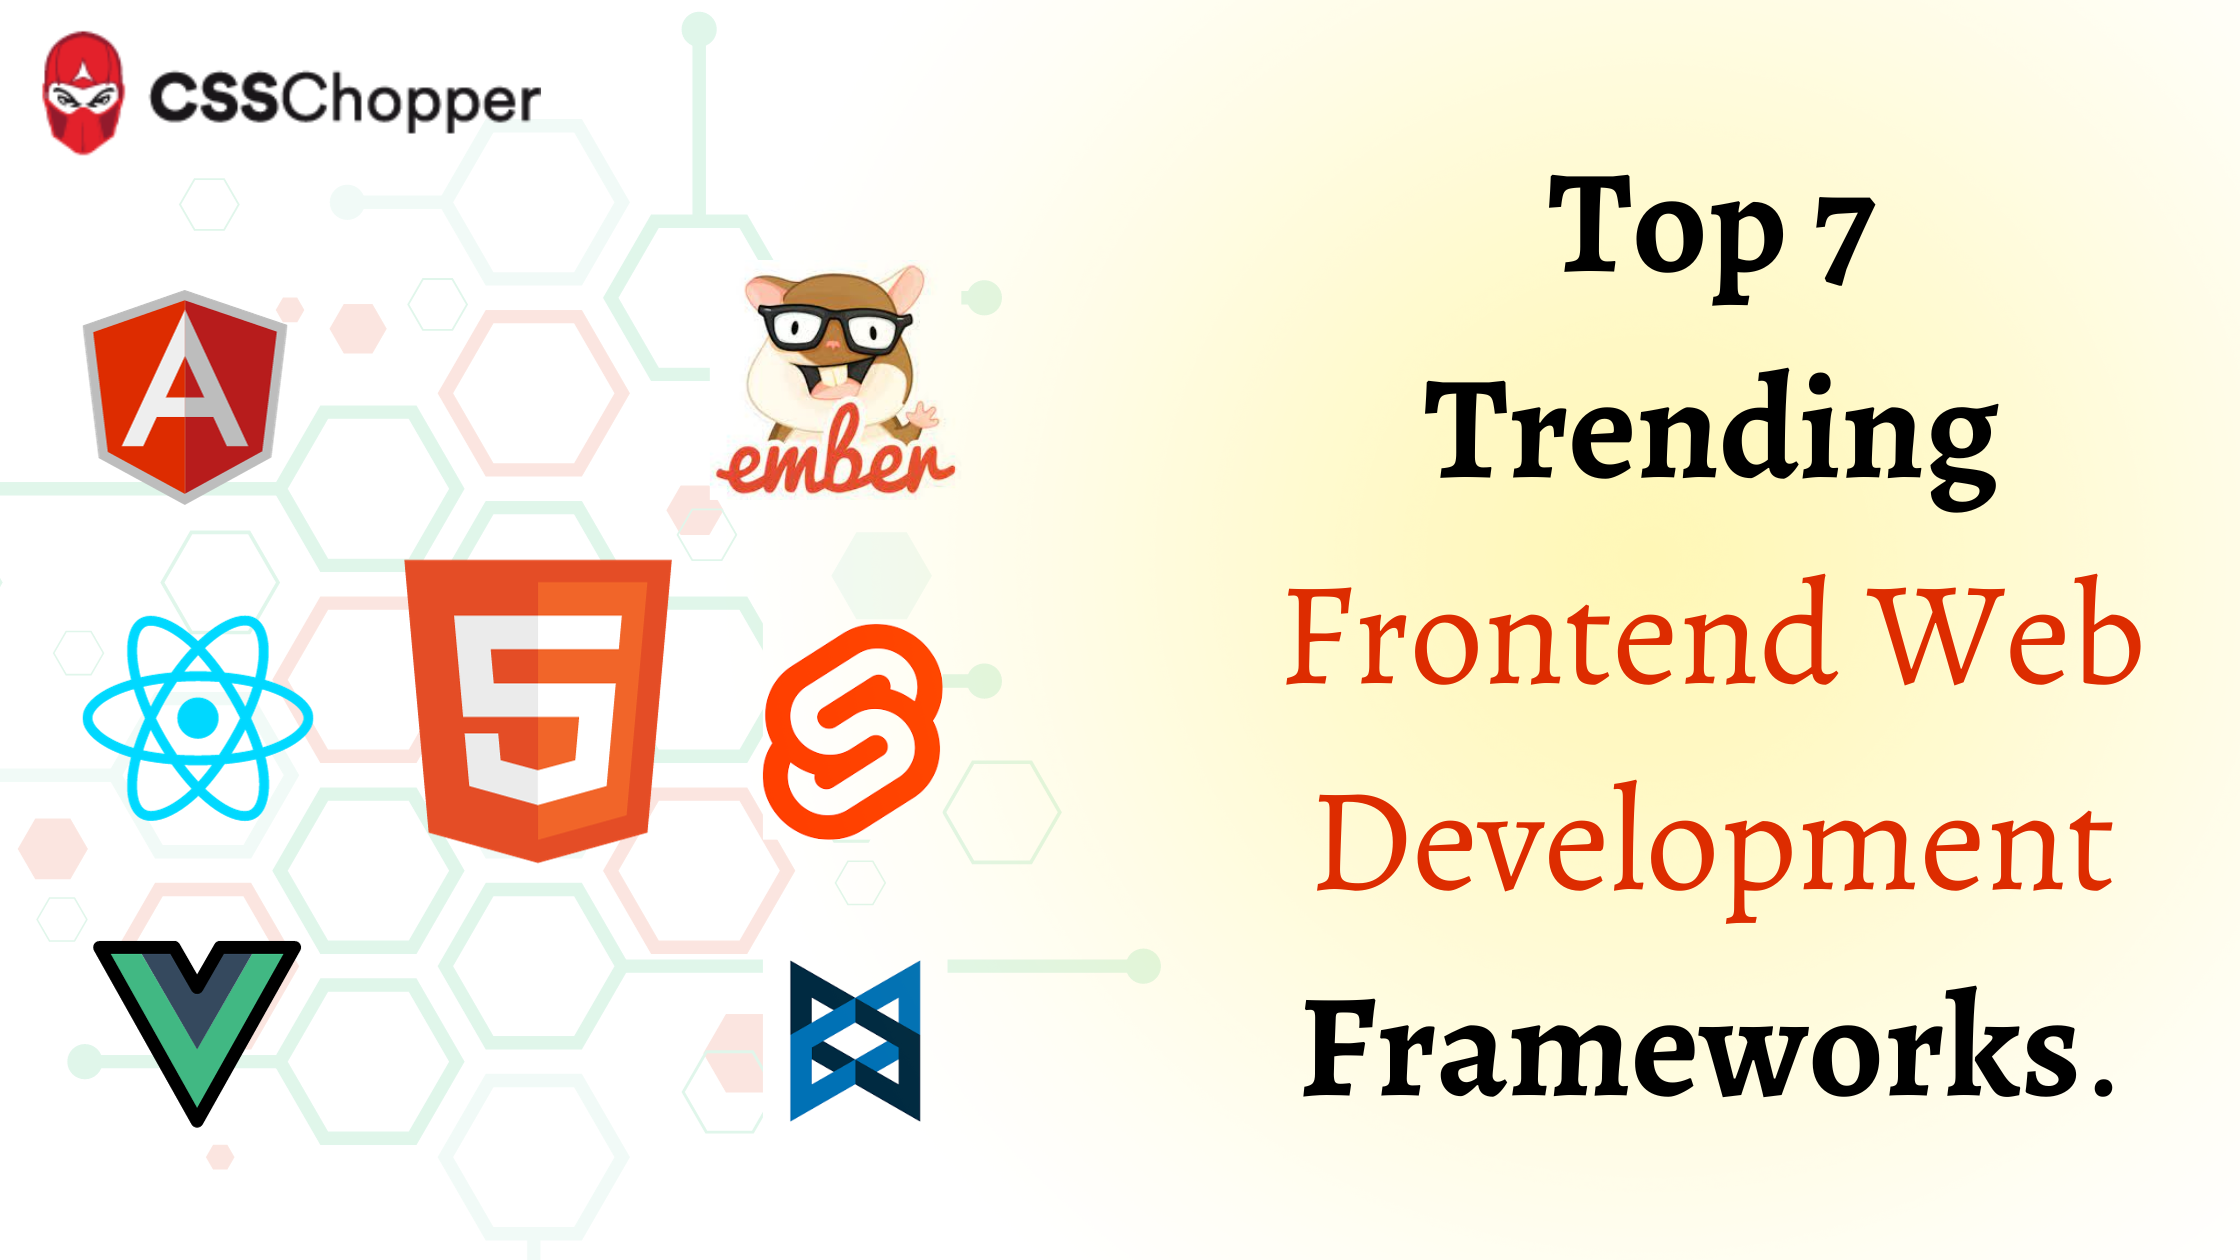 Top 7 Trending Frontend Web Development Frameworks.